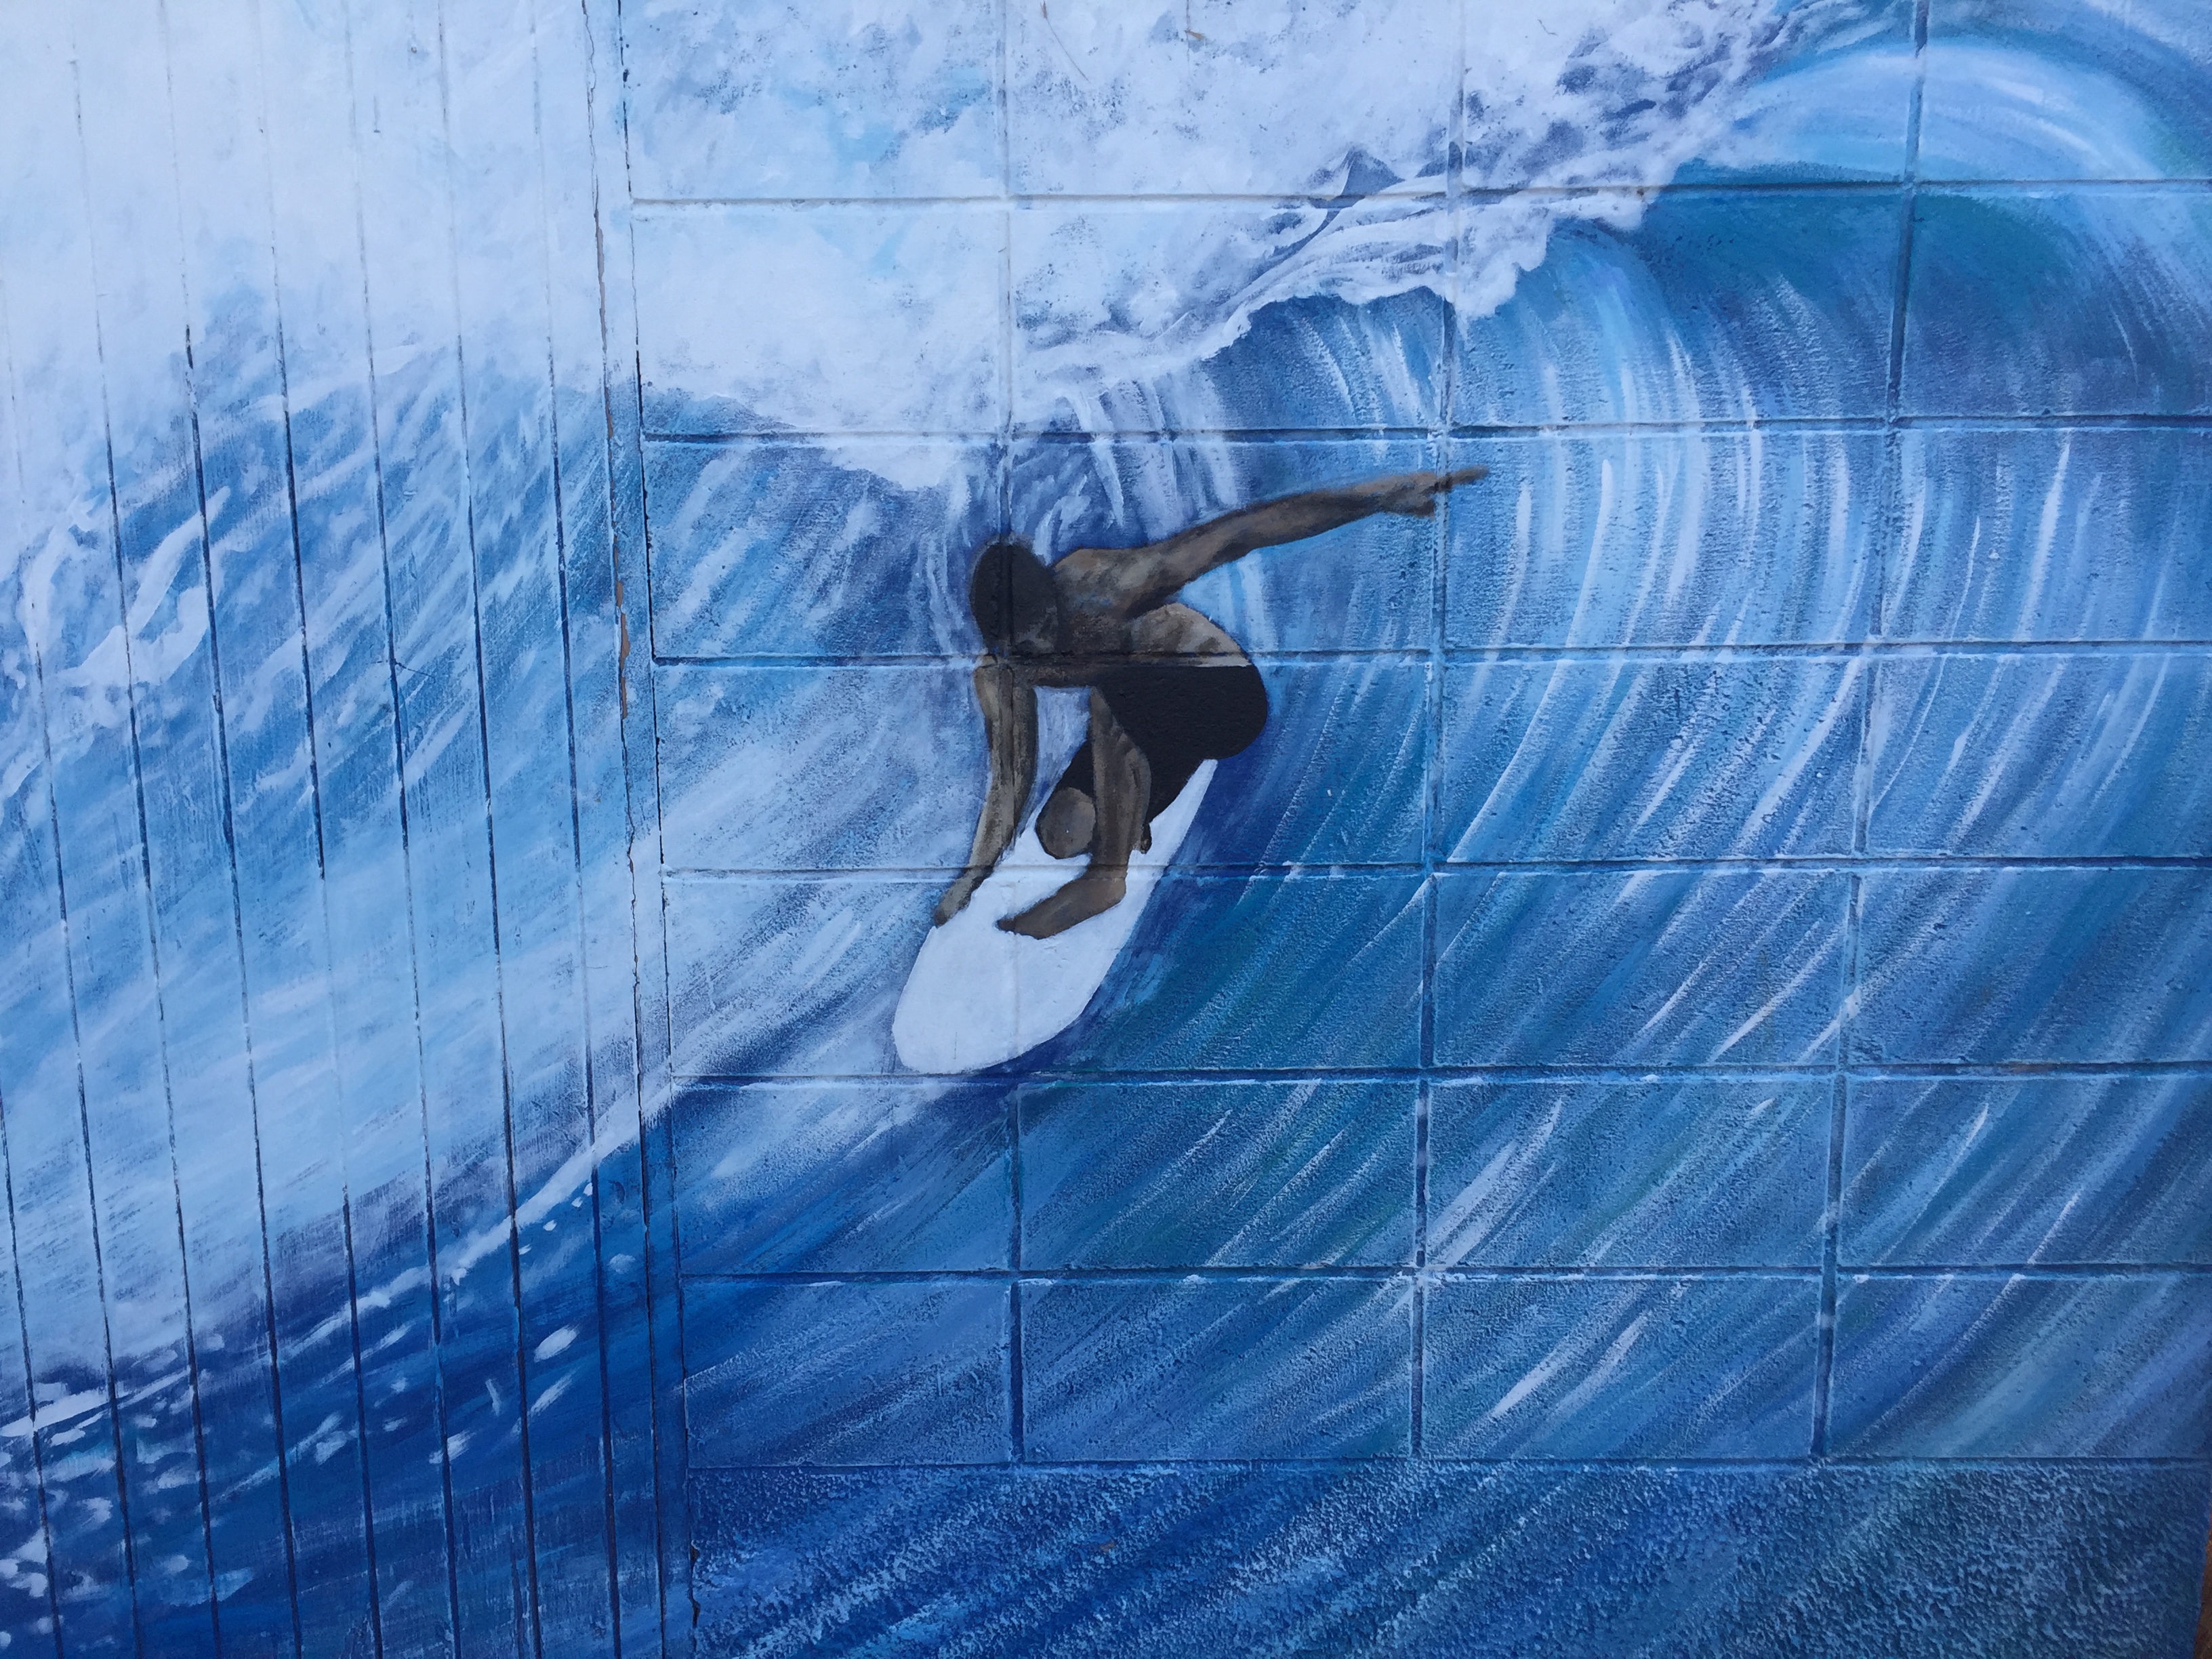 Mural at St. Kilda Surf Club